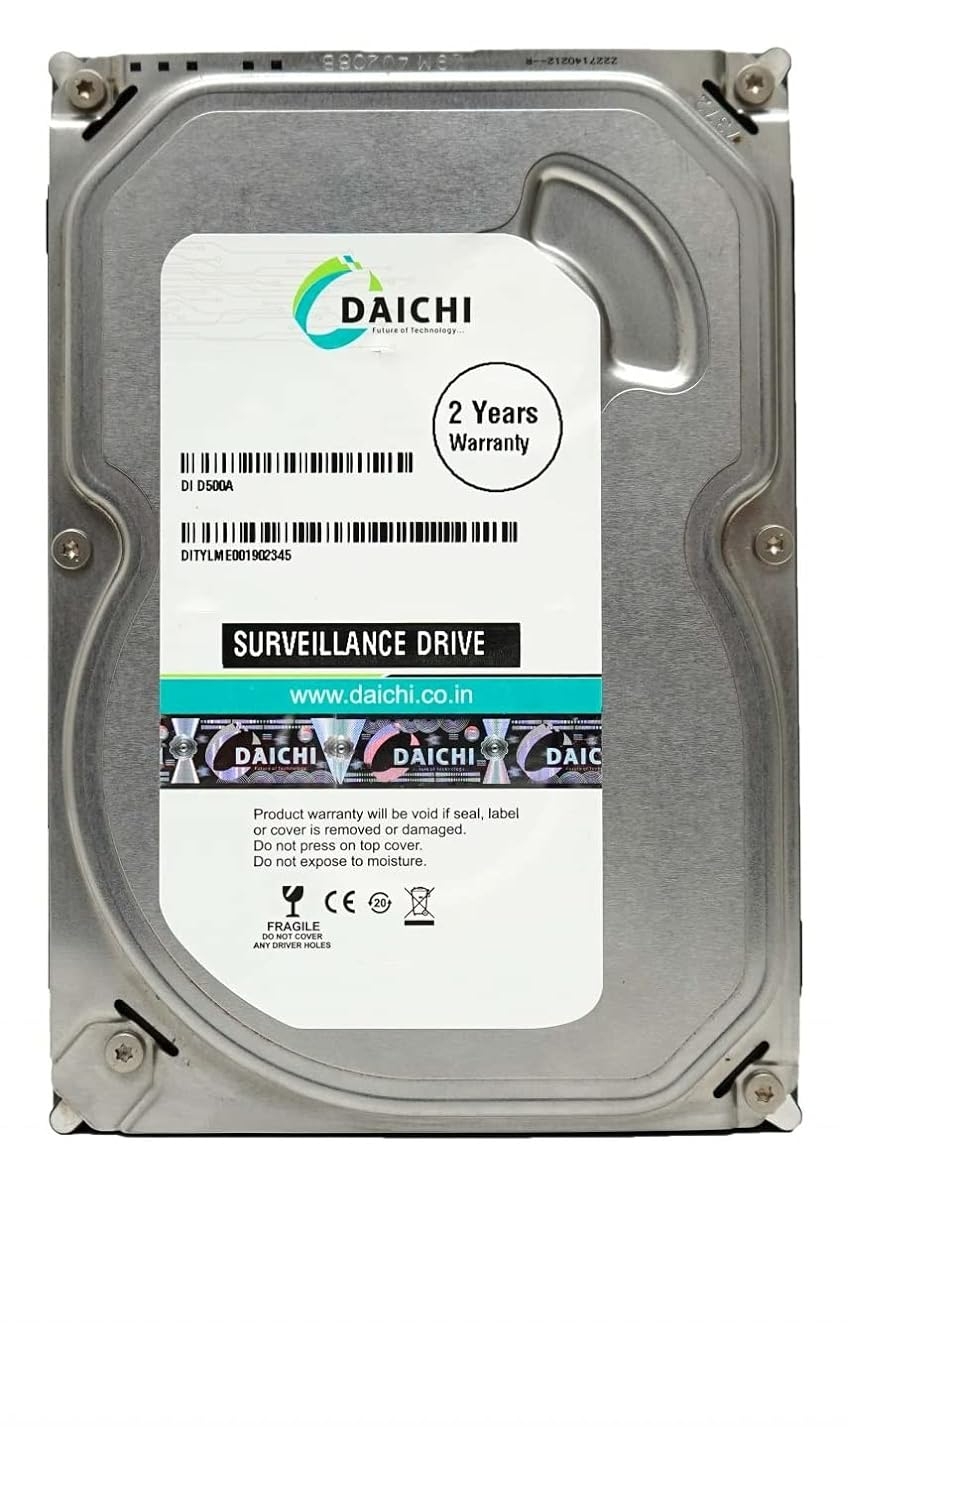 DAICHI 500 GB SATA 3.5 Desktop Surveillance Internal Hard Disk Drive (500GB Internal Hard Disk for Desktop)